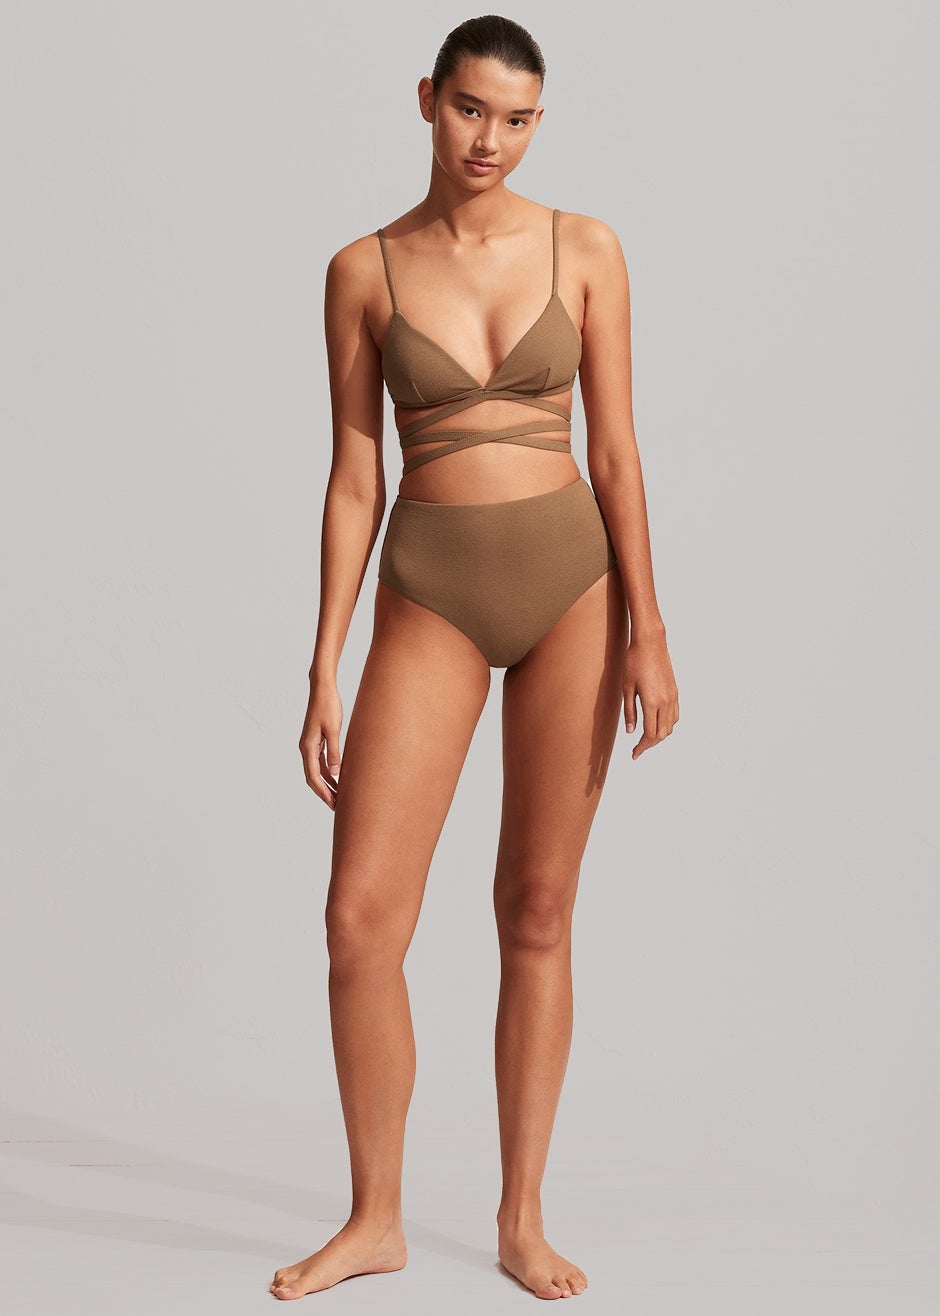 Matteau High Waist Bikini Brief - Cinnamon Crinkle